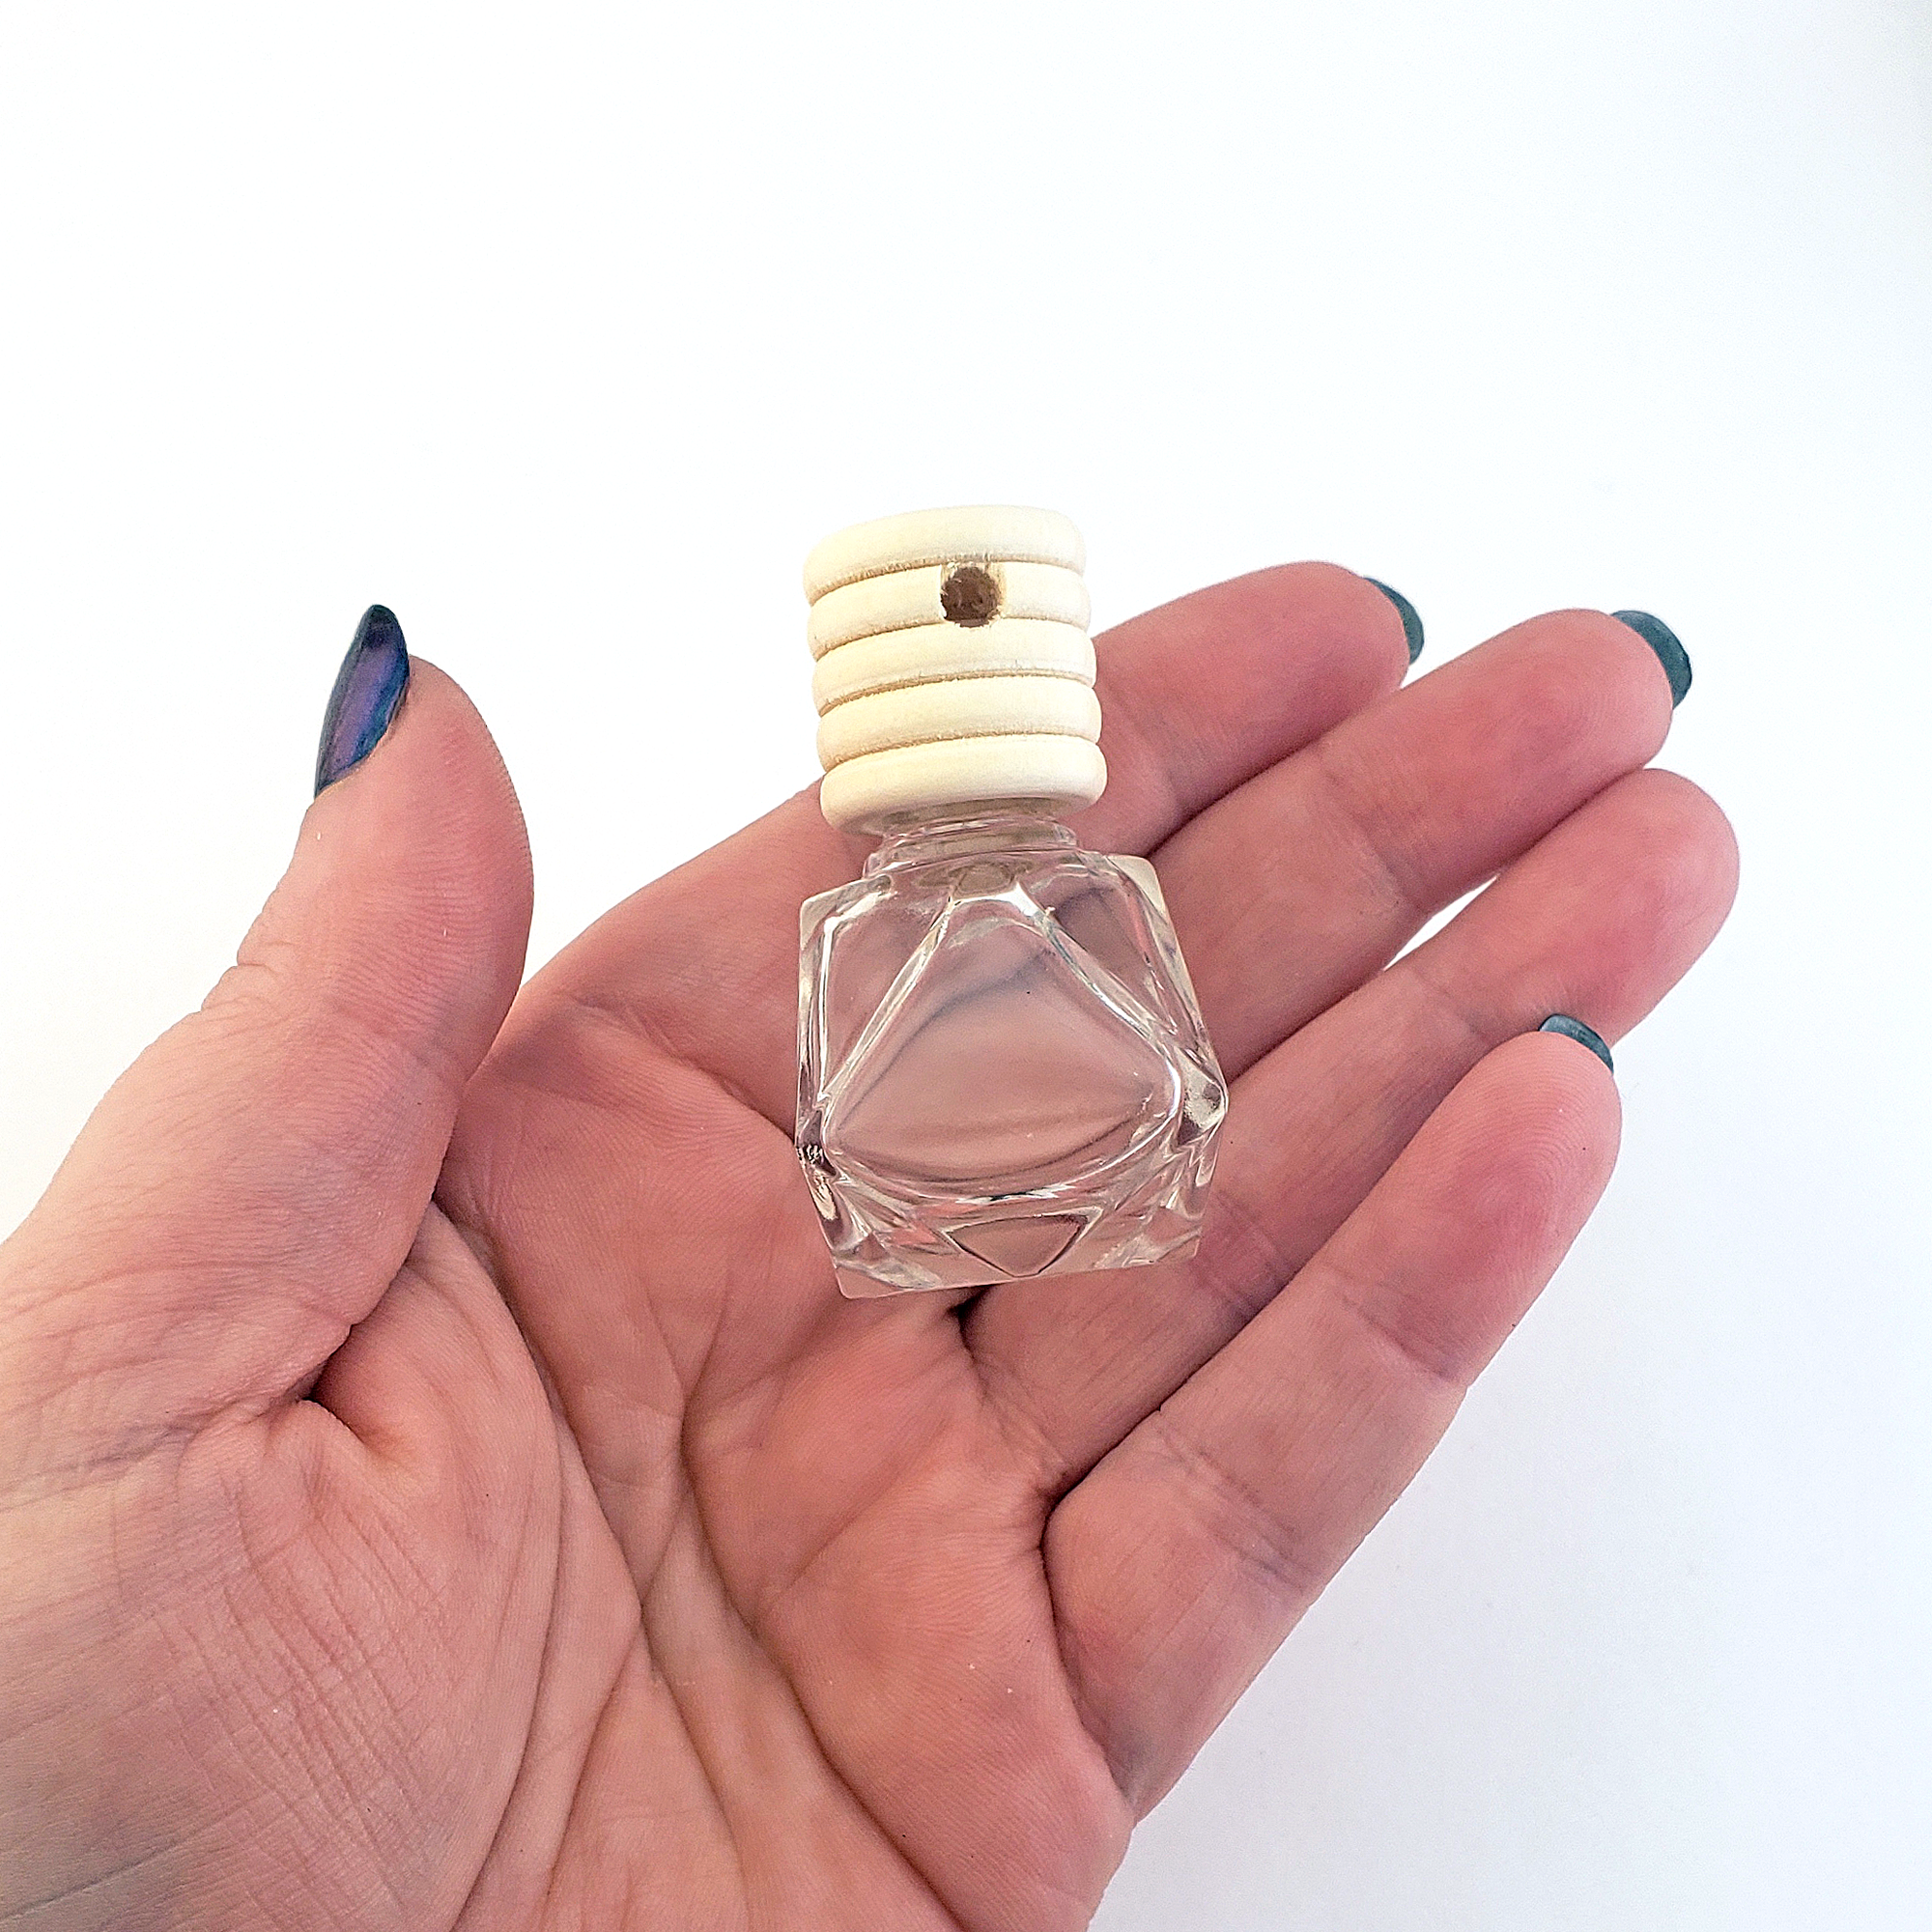 Glass Bottle Pendant | Empty Spell Jar Bottle for Essential Oils, Herbs, & Crystal Chips - Empty Perfume Bottle in Hand